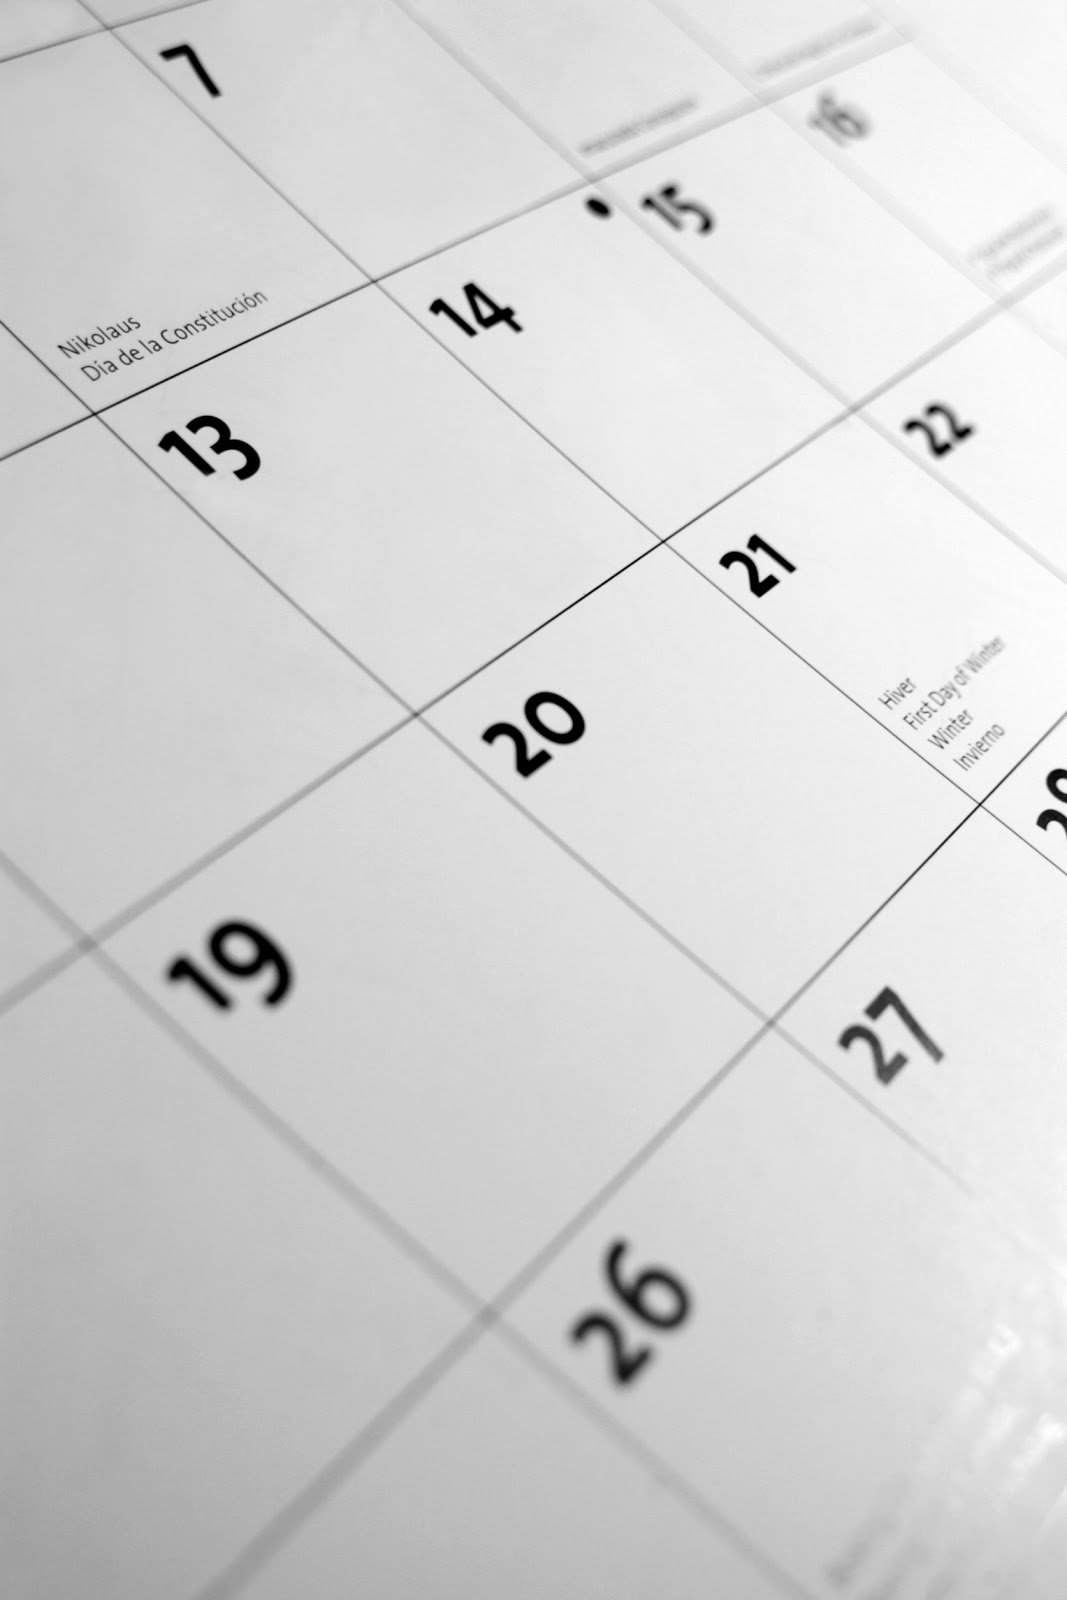 Mark Your Calendar Town Hall Meetings USA University